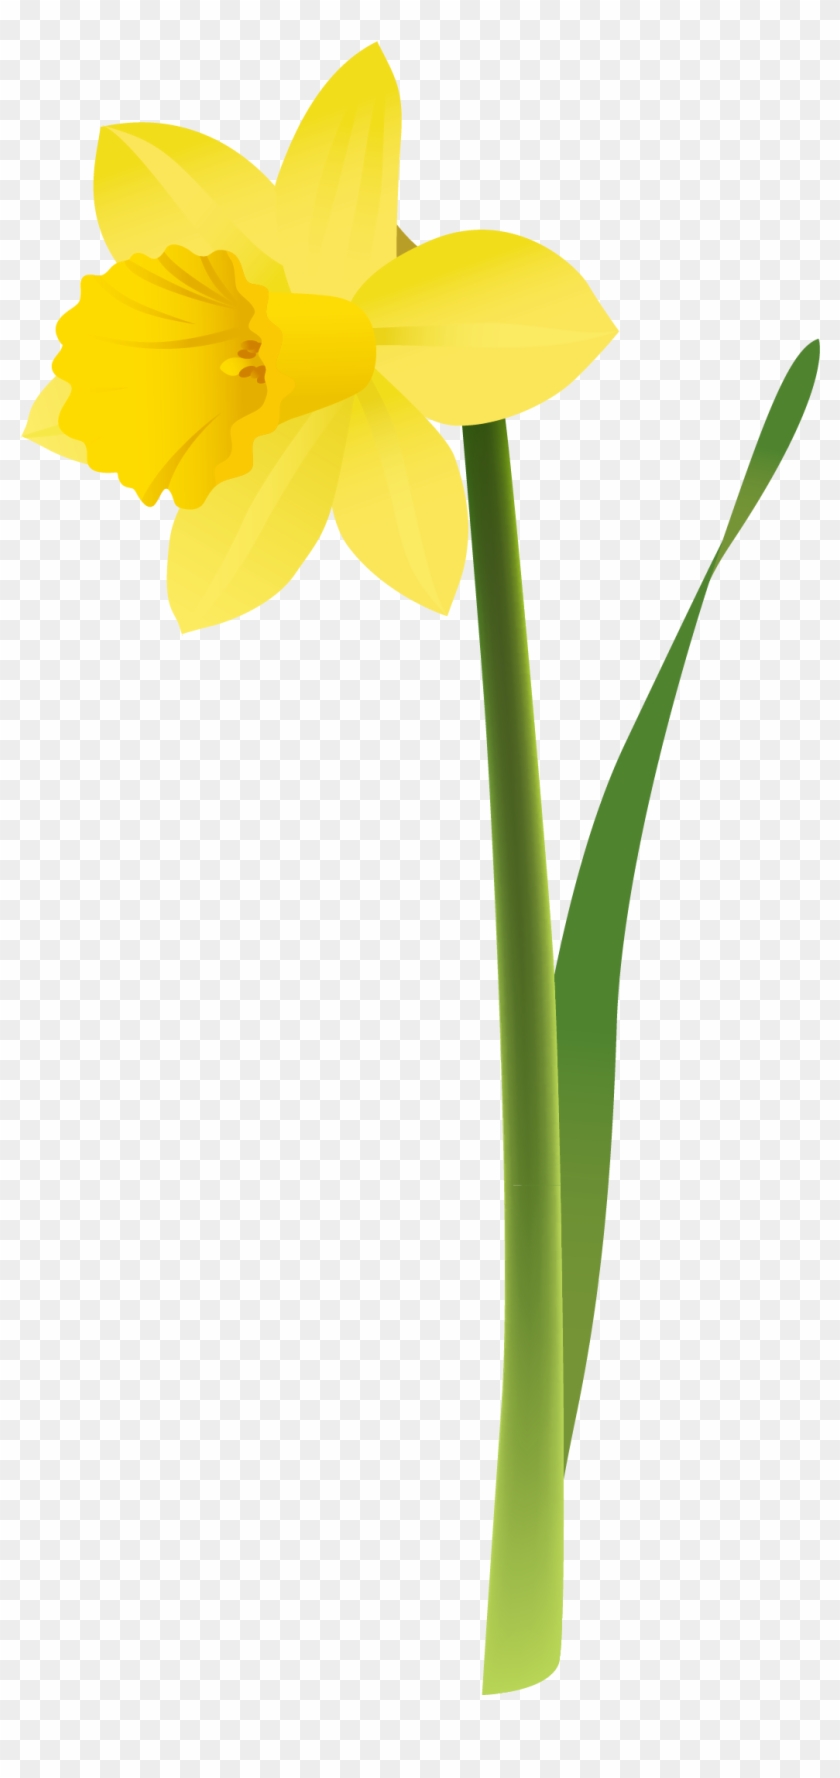 Tissue Paper Daffodil Clipart - Clip Art Daffodil #169928